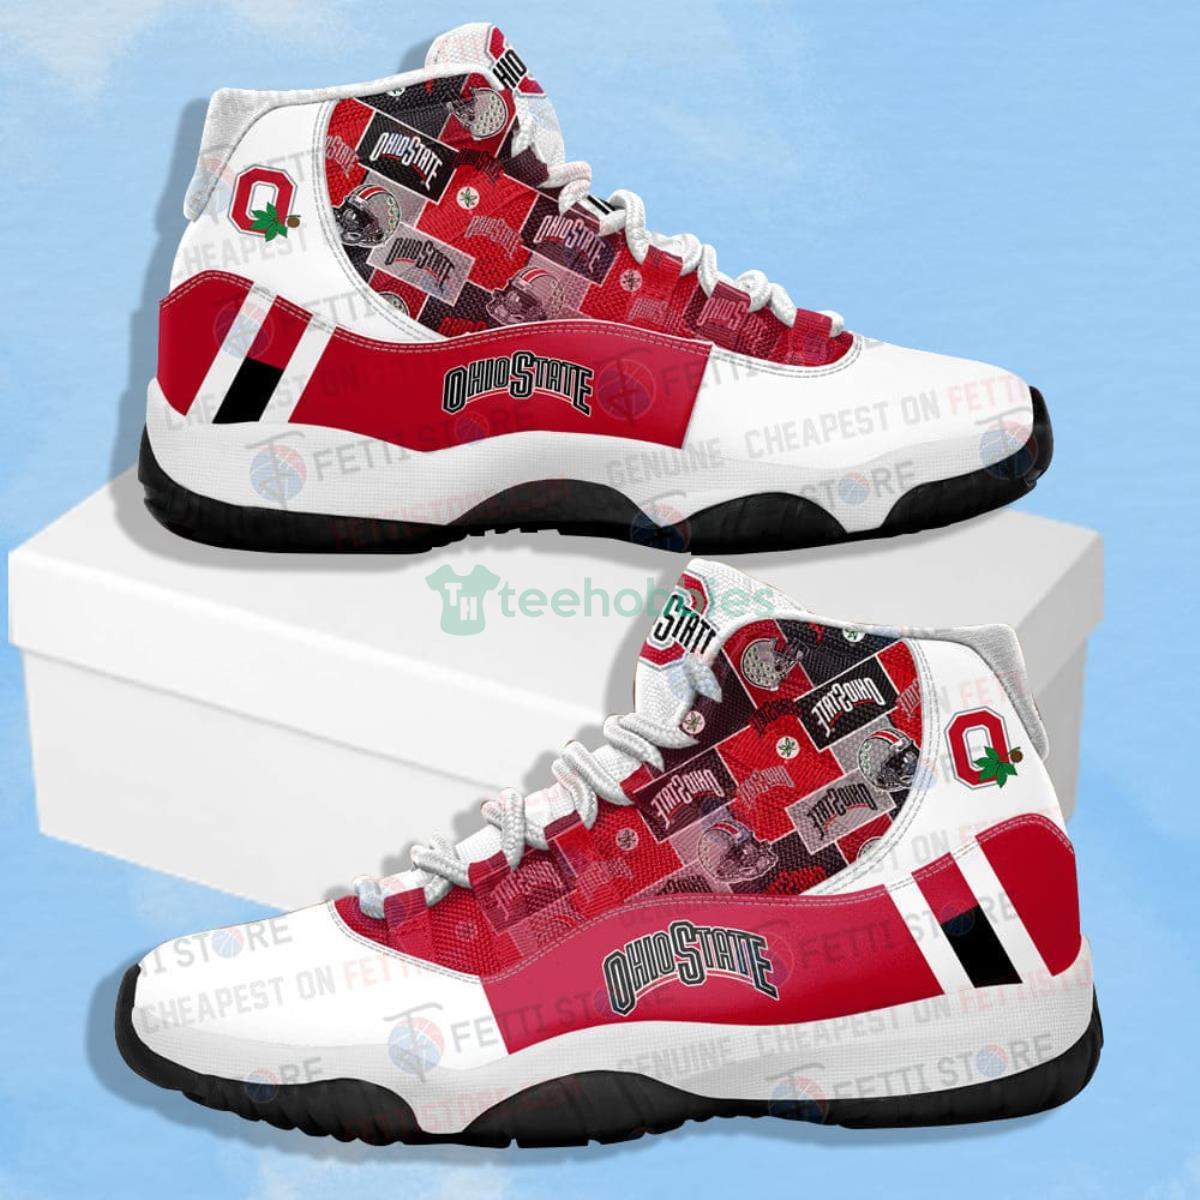 Ohio State Buckeyes - NCAA Impressive Design Air Jordan 11 Shoes Product Photo 1